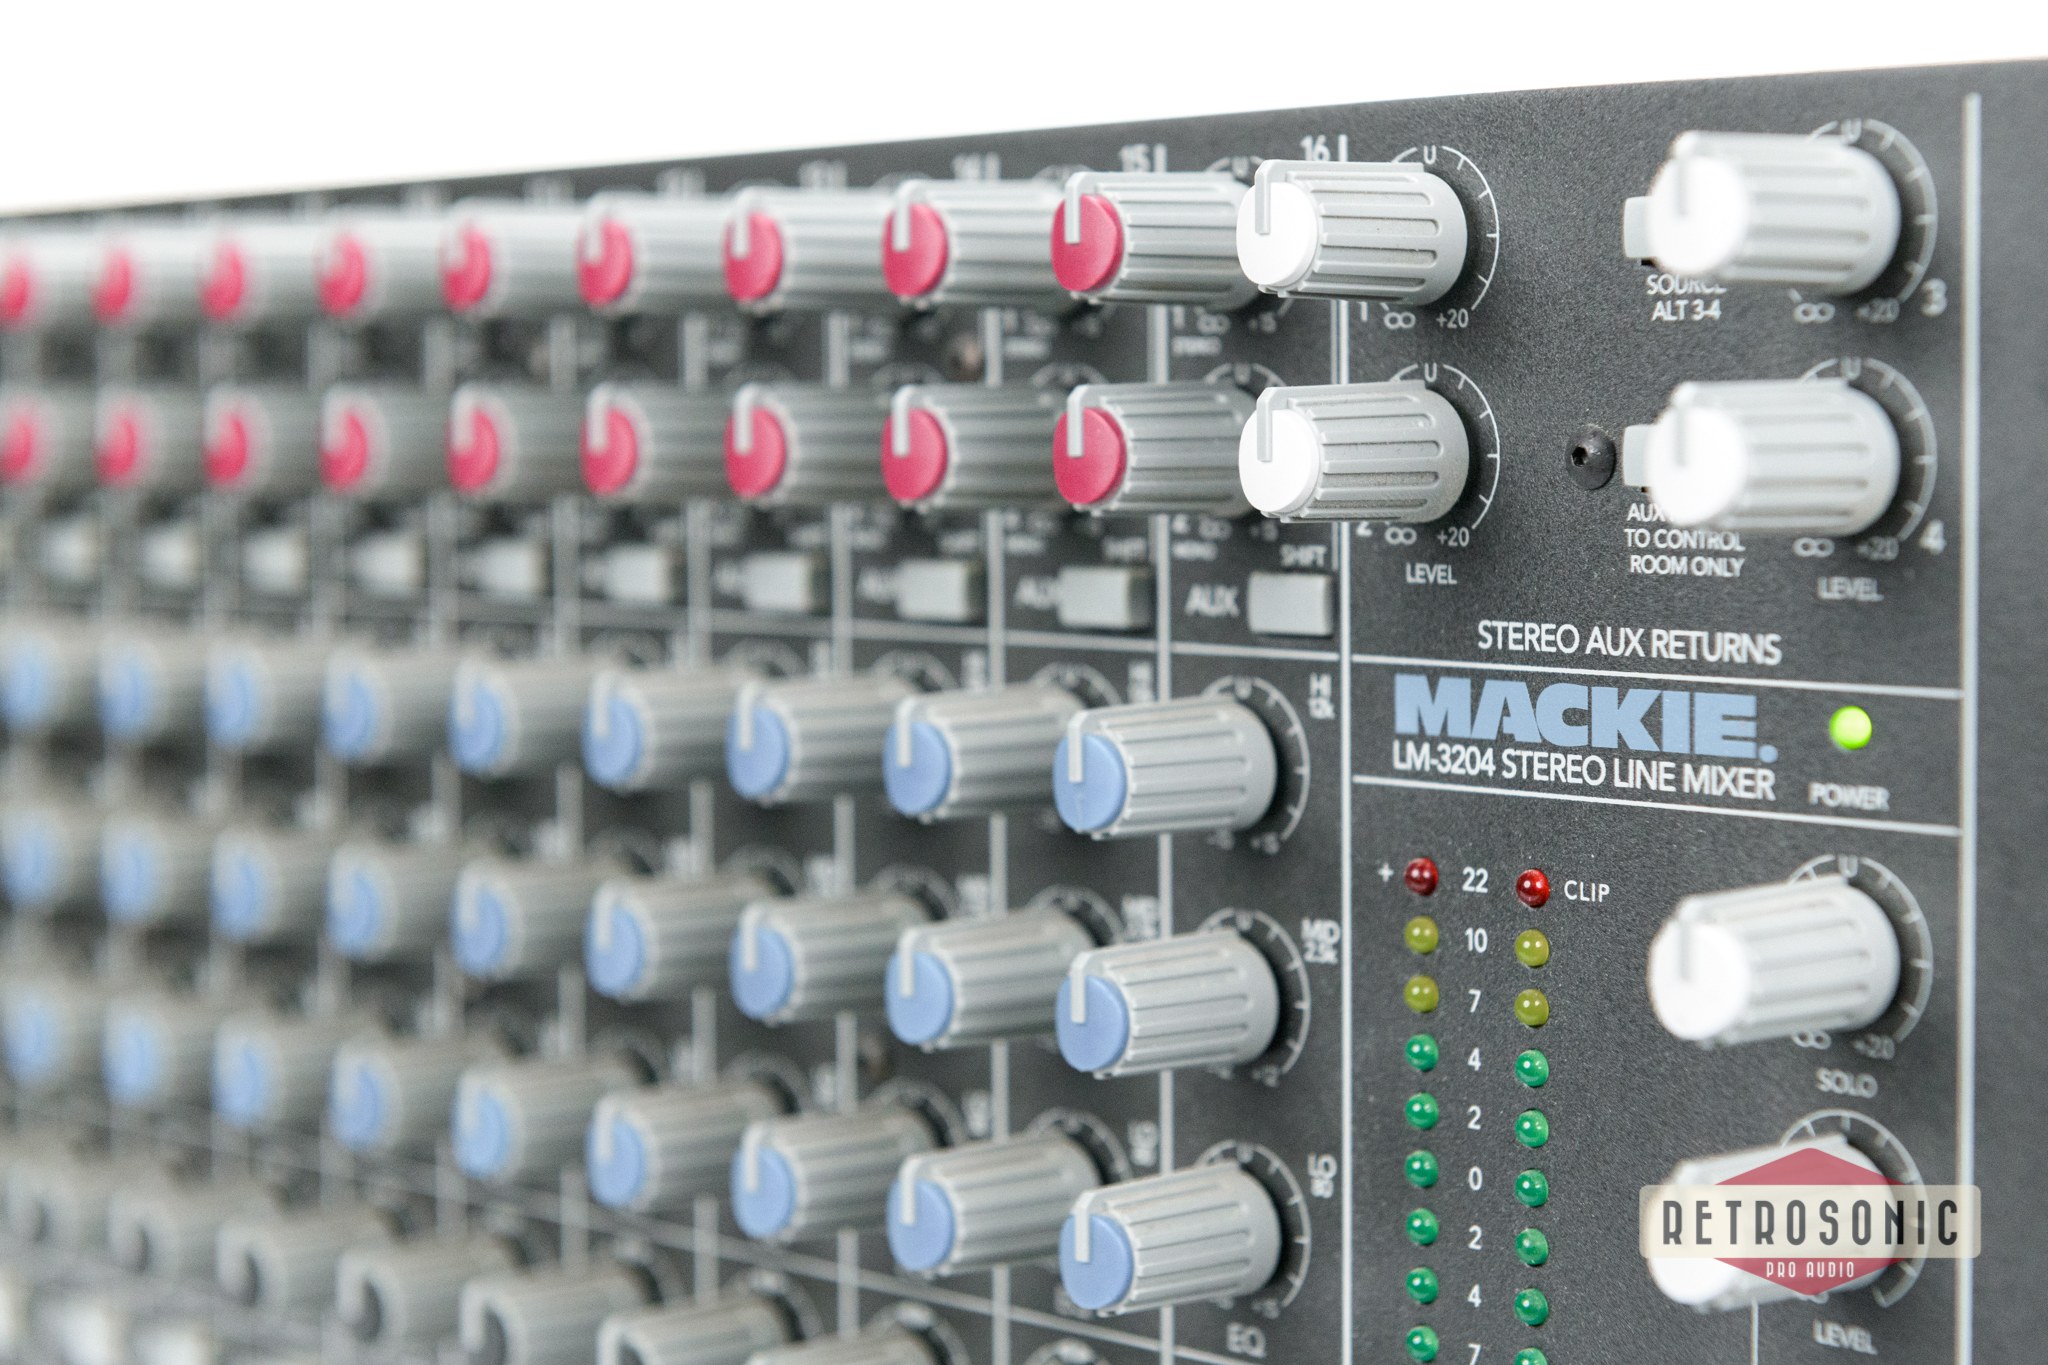 Mackie LM3204 Keyboard Mixer